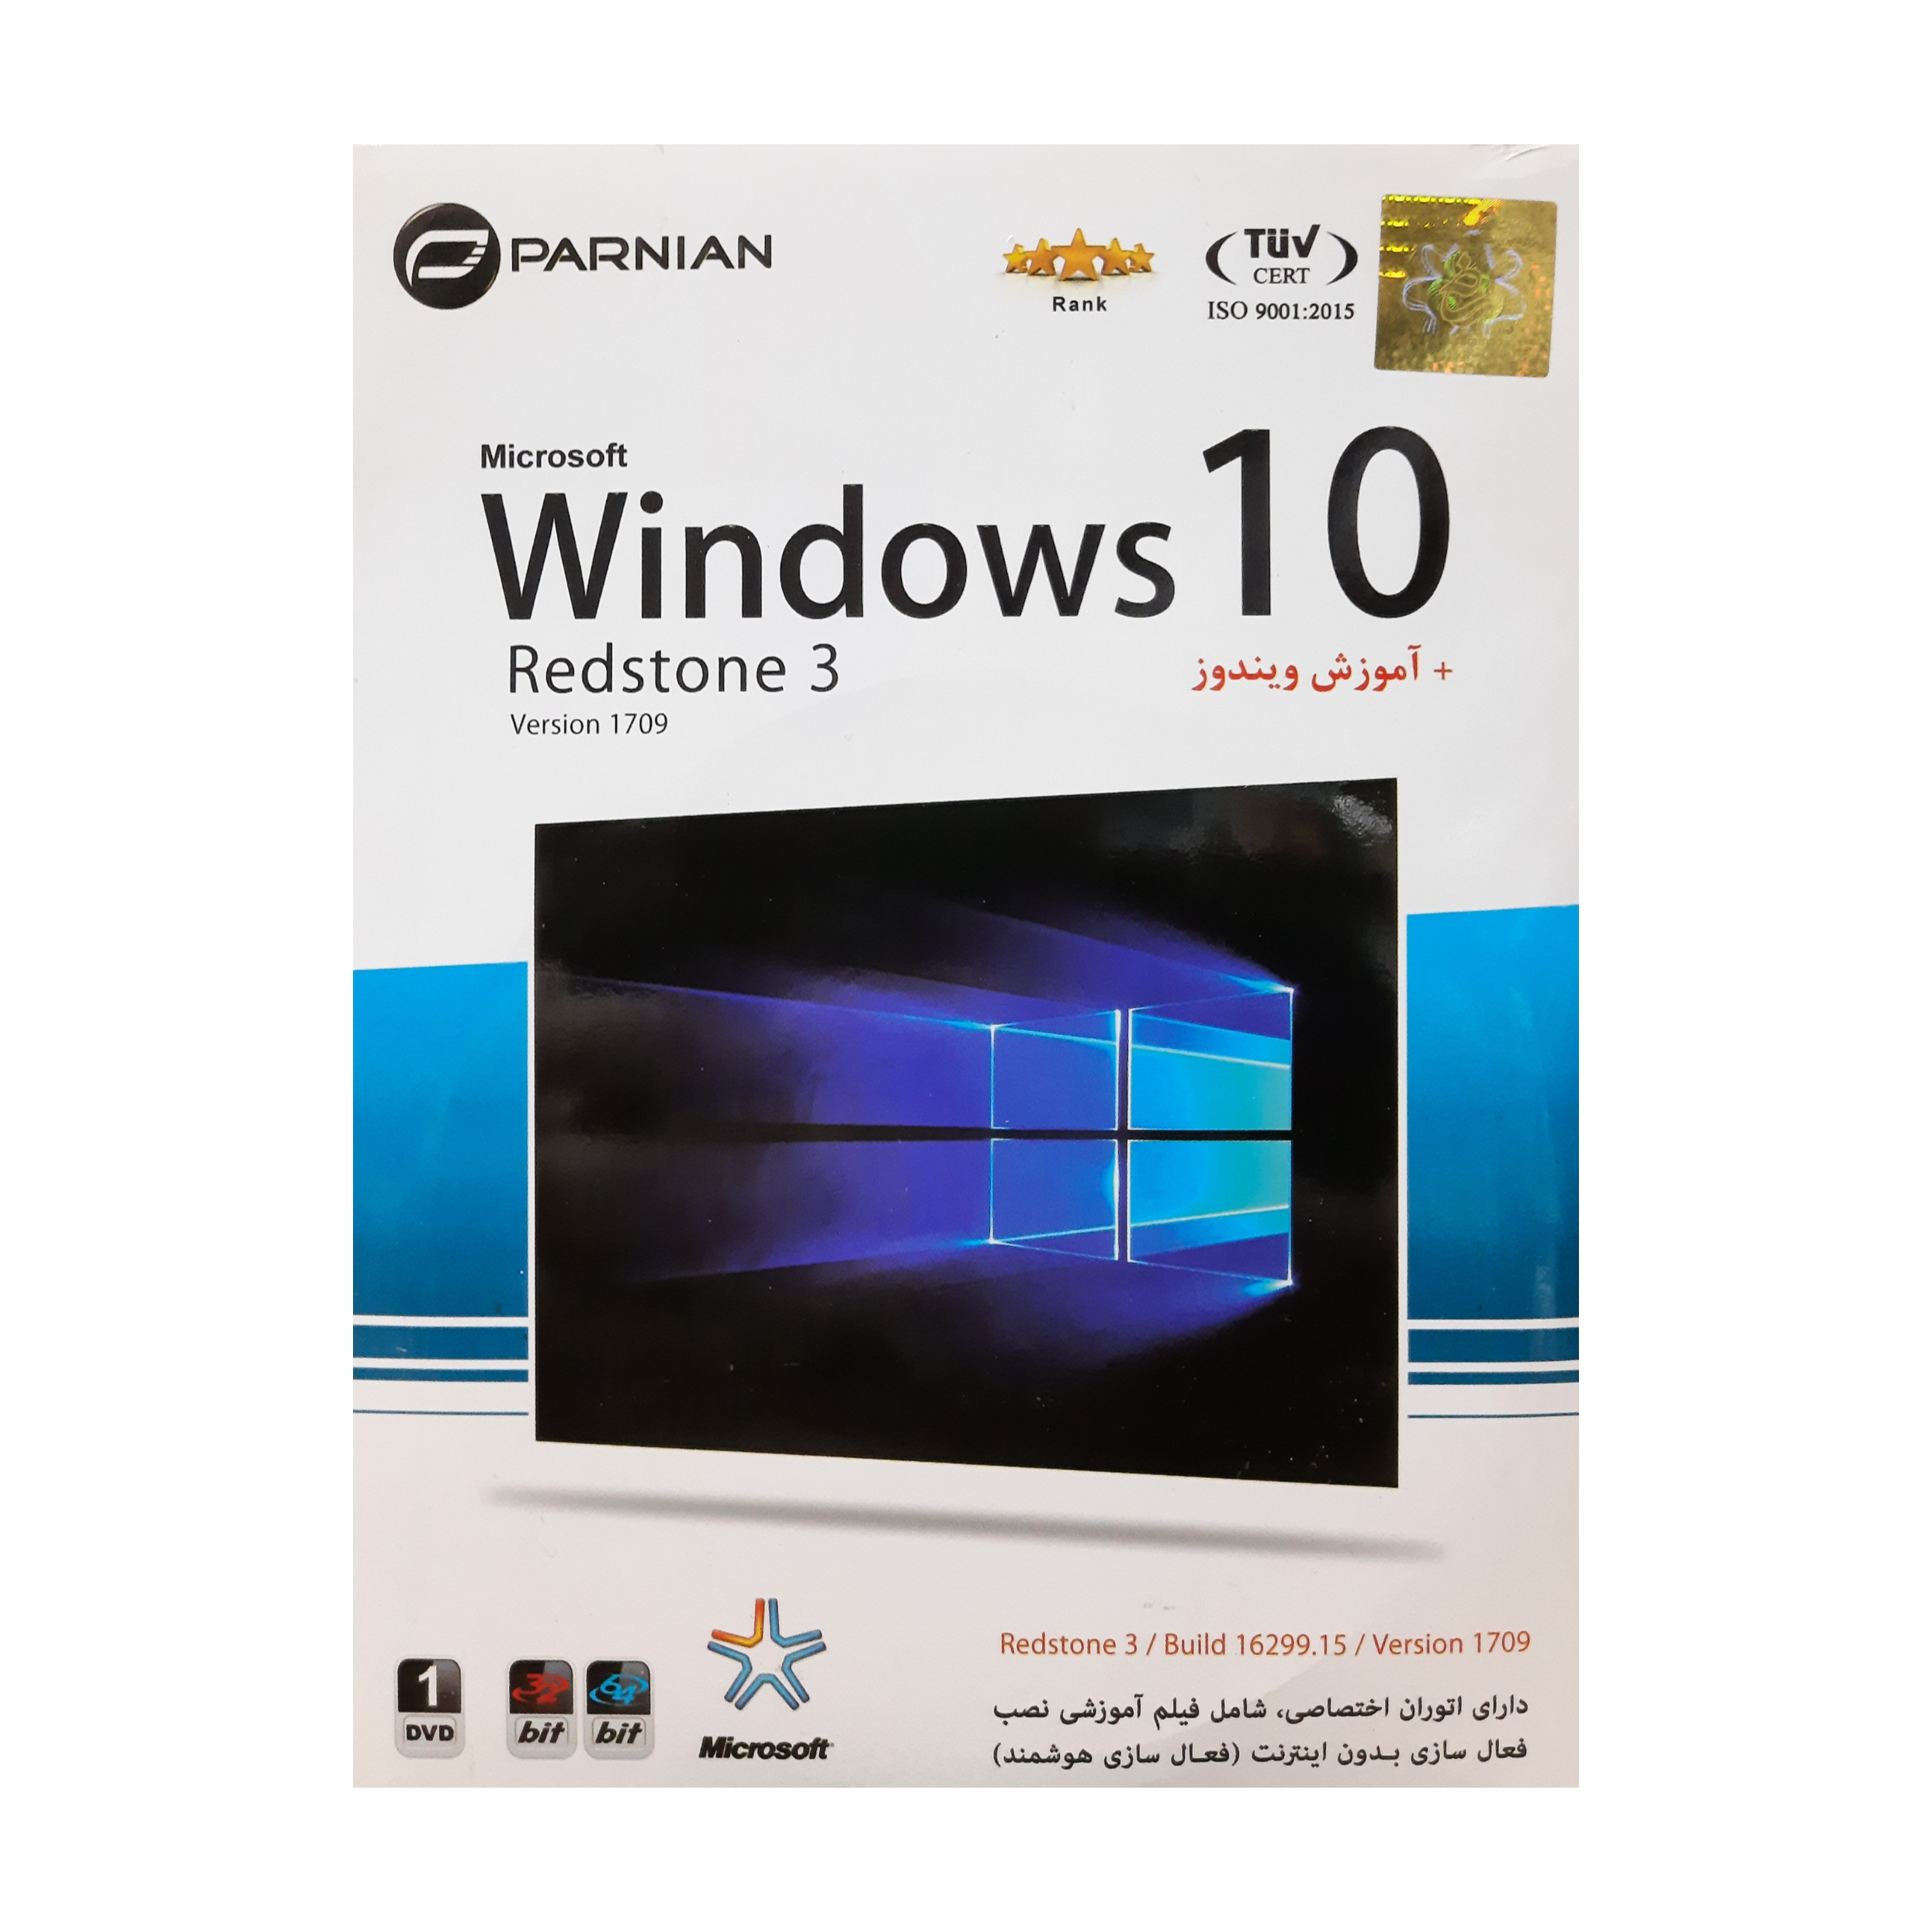 سیستم عامل Windows ۱۰ نشر پرنیان